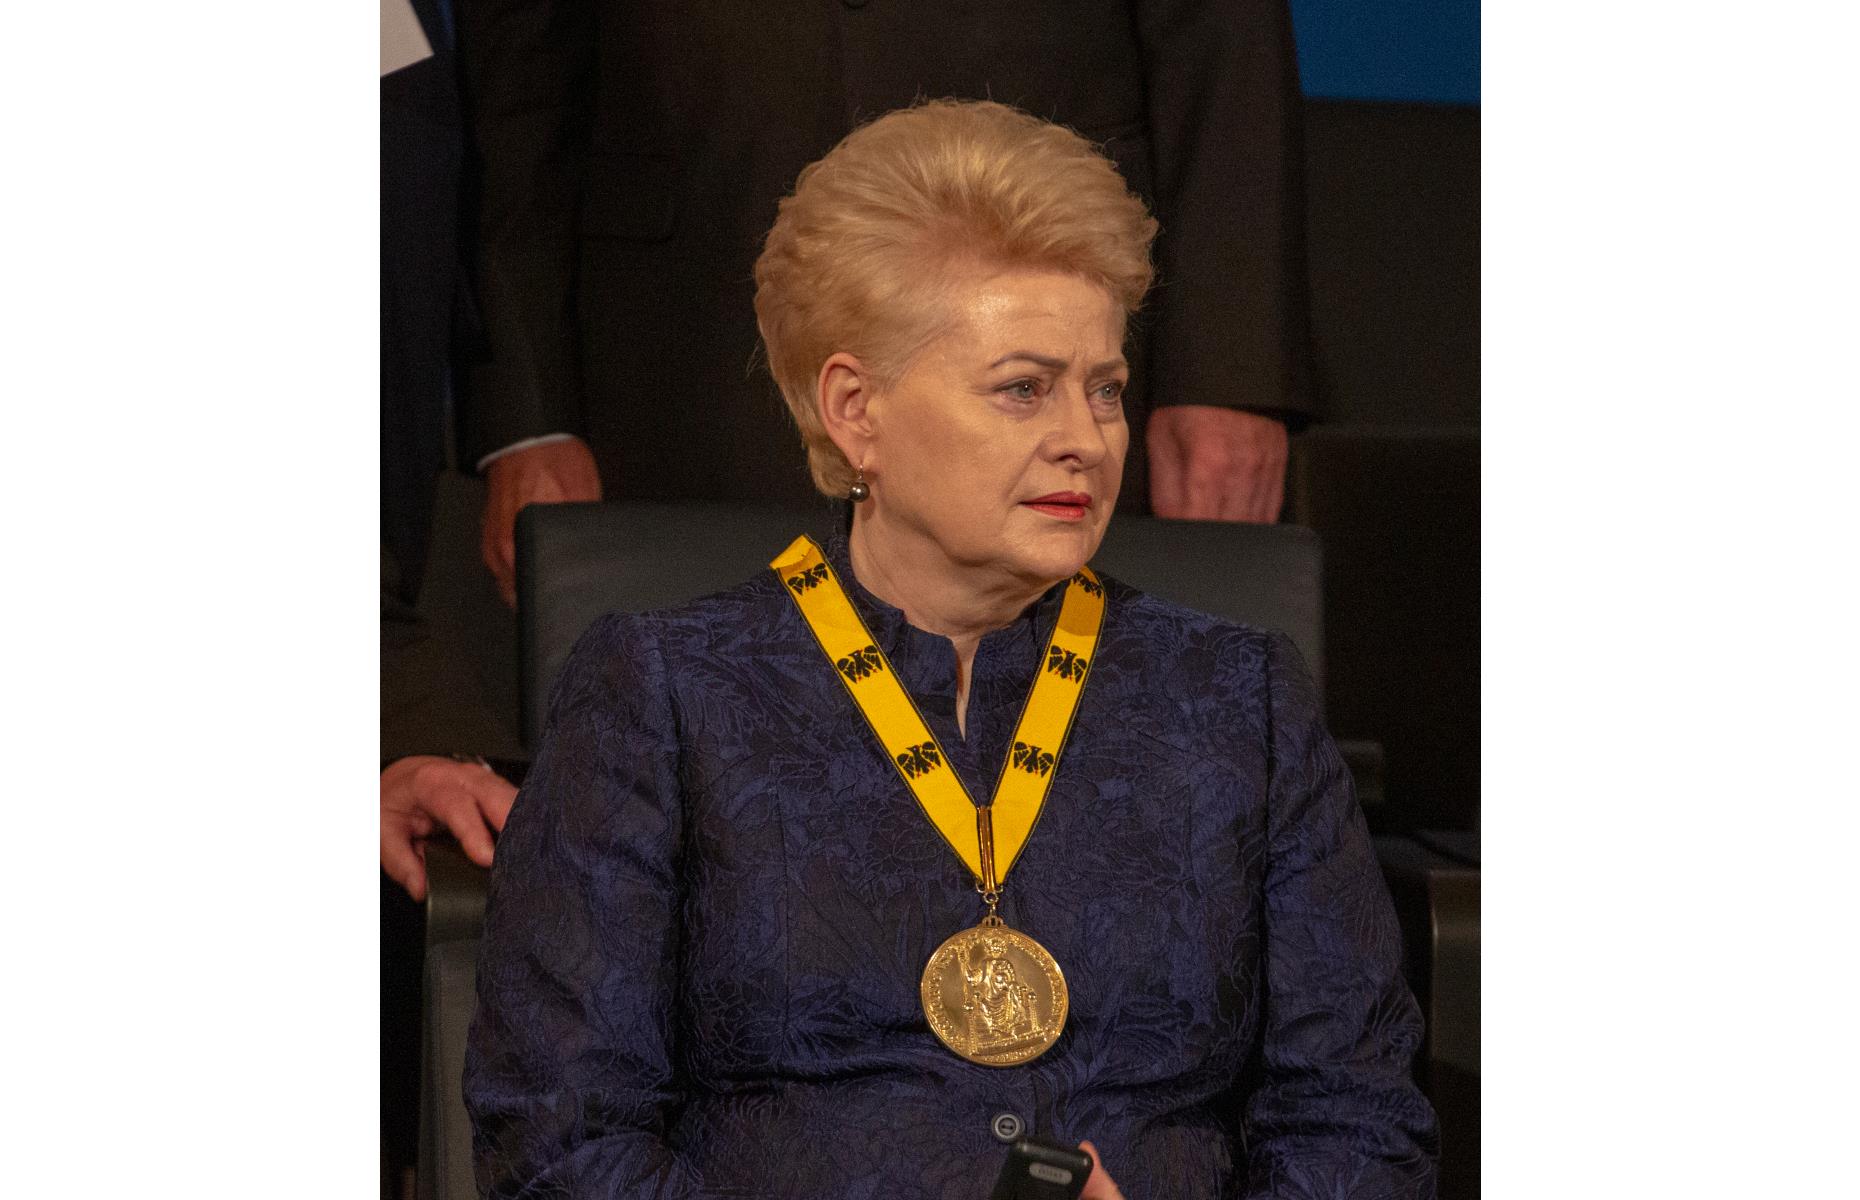 Dalia Grybauskaitė, former President of Lithuania: Factory worker